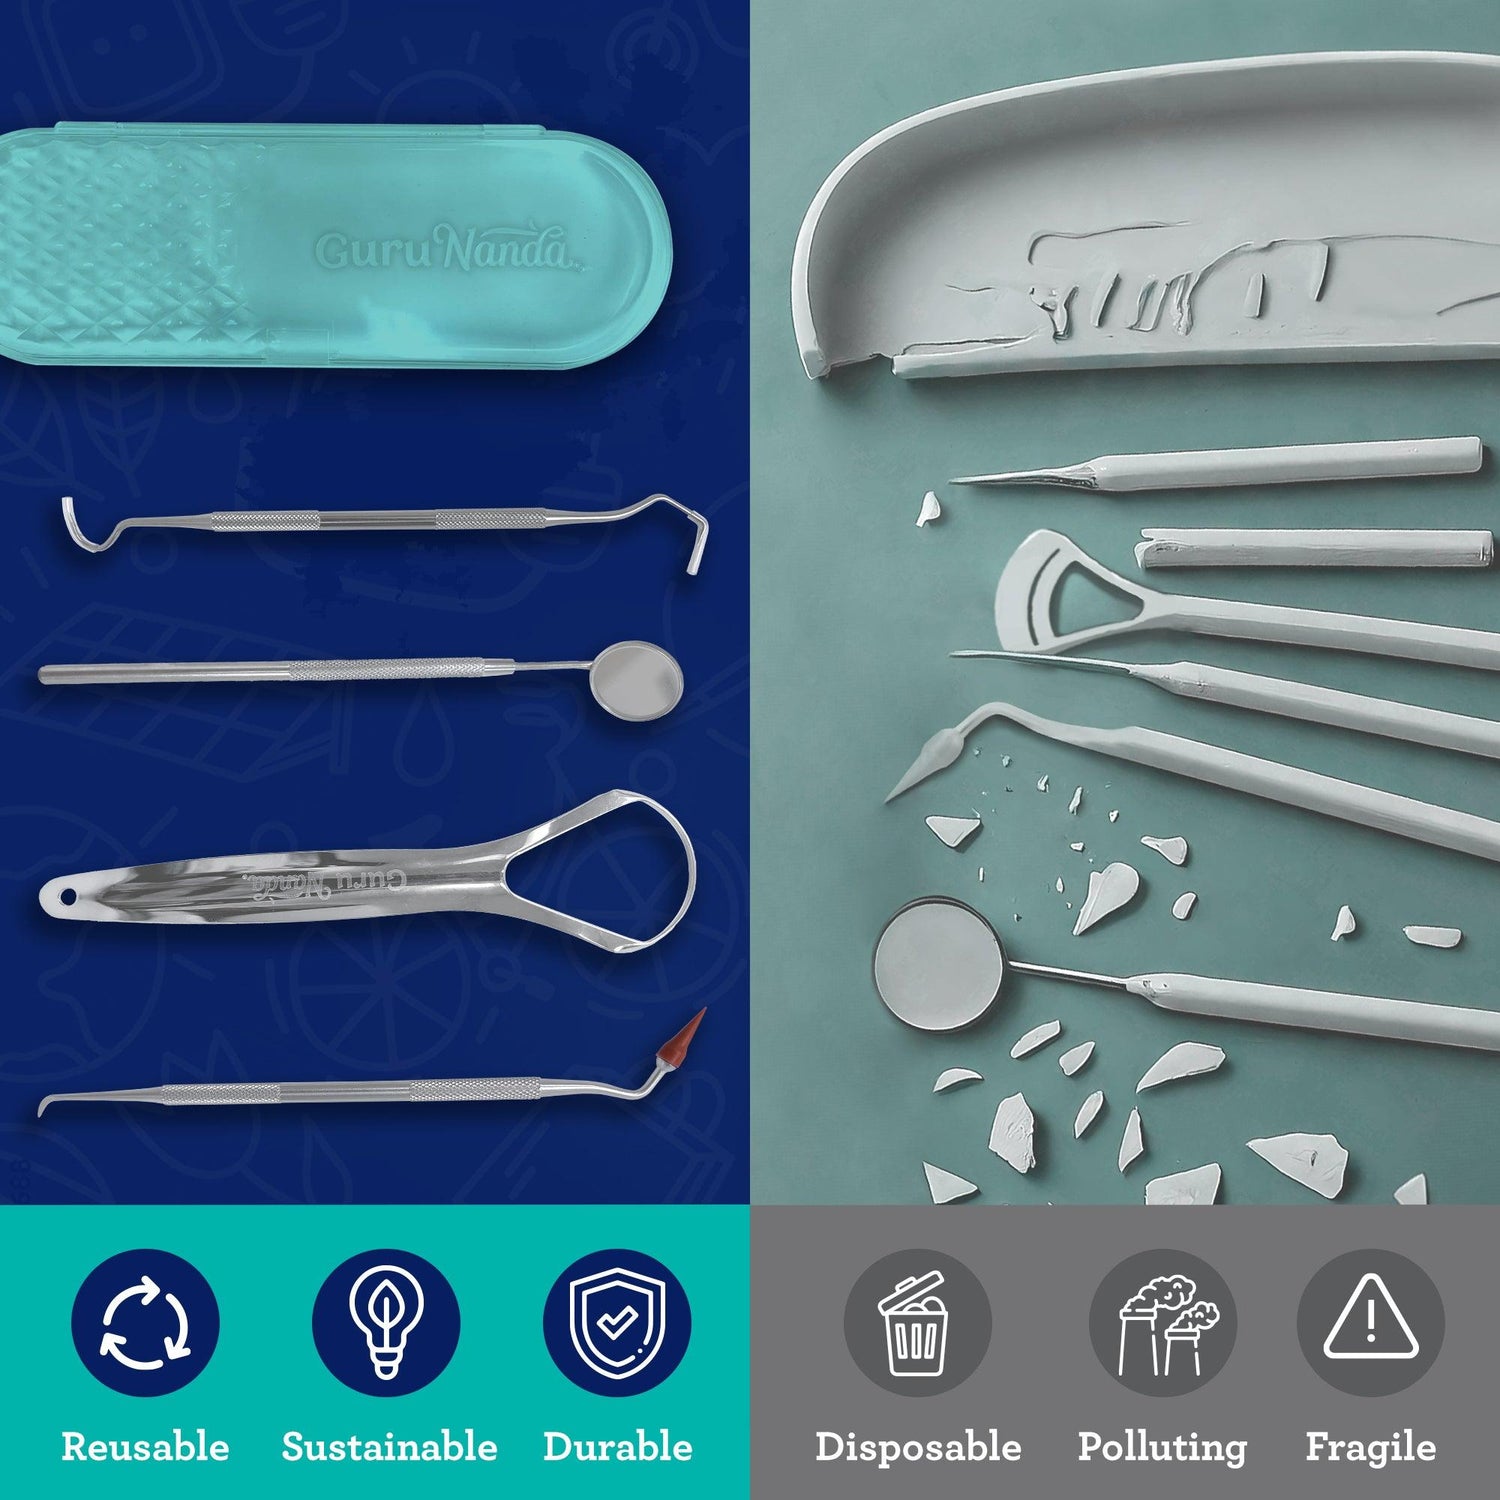 Stainless Steel Dental Kit with Travel Case - GuruNanda